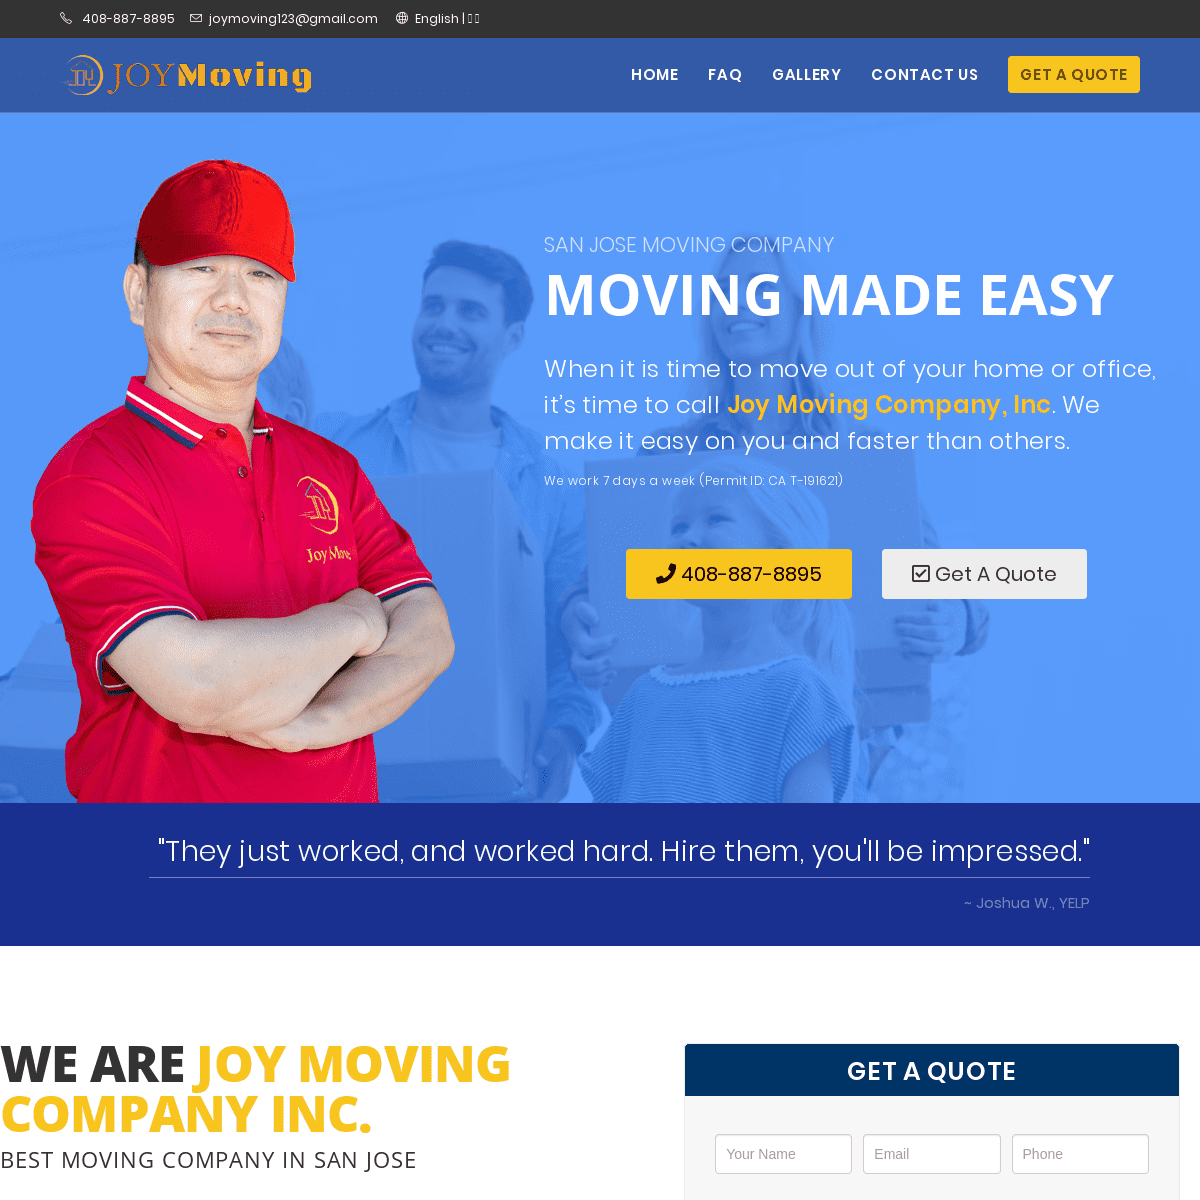 A complete backup of newjoymoving.com